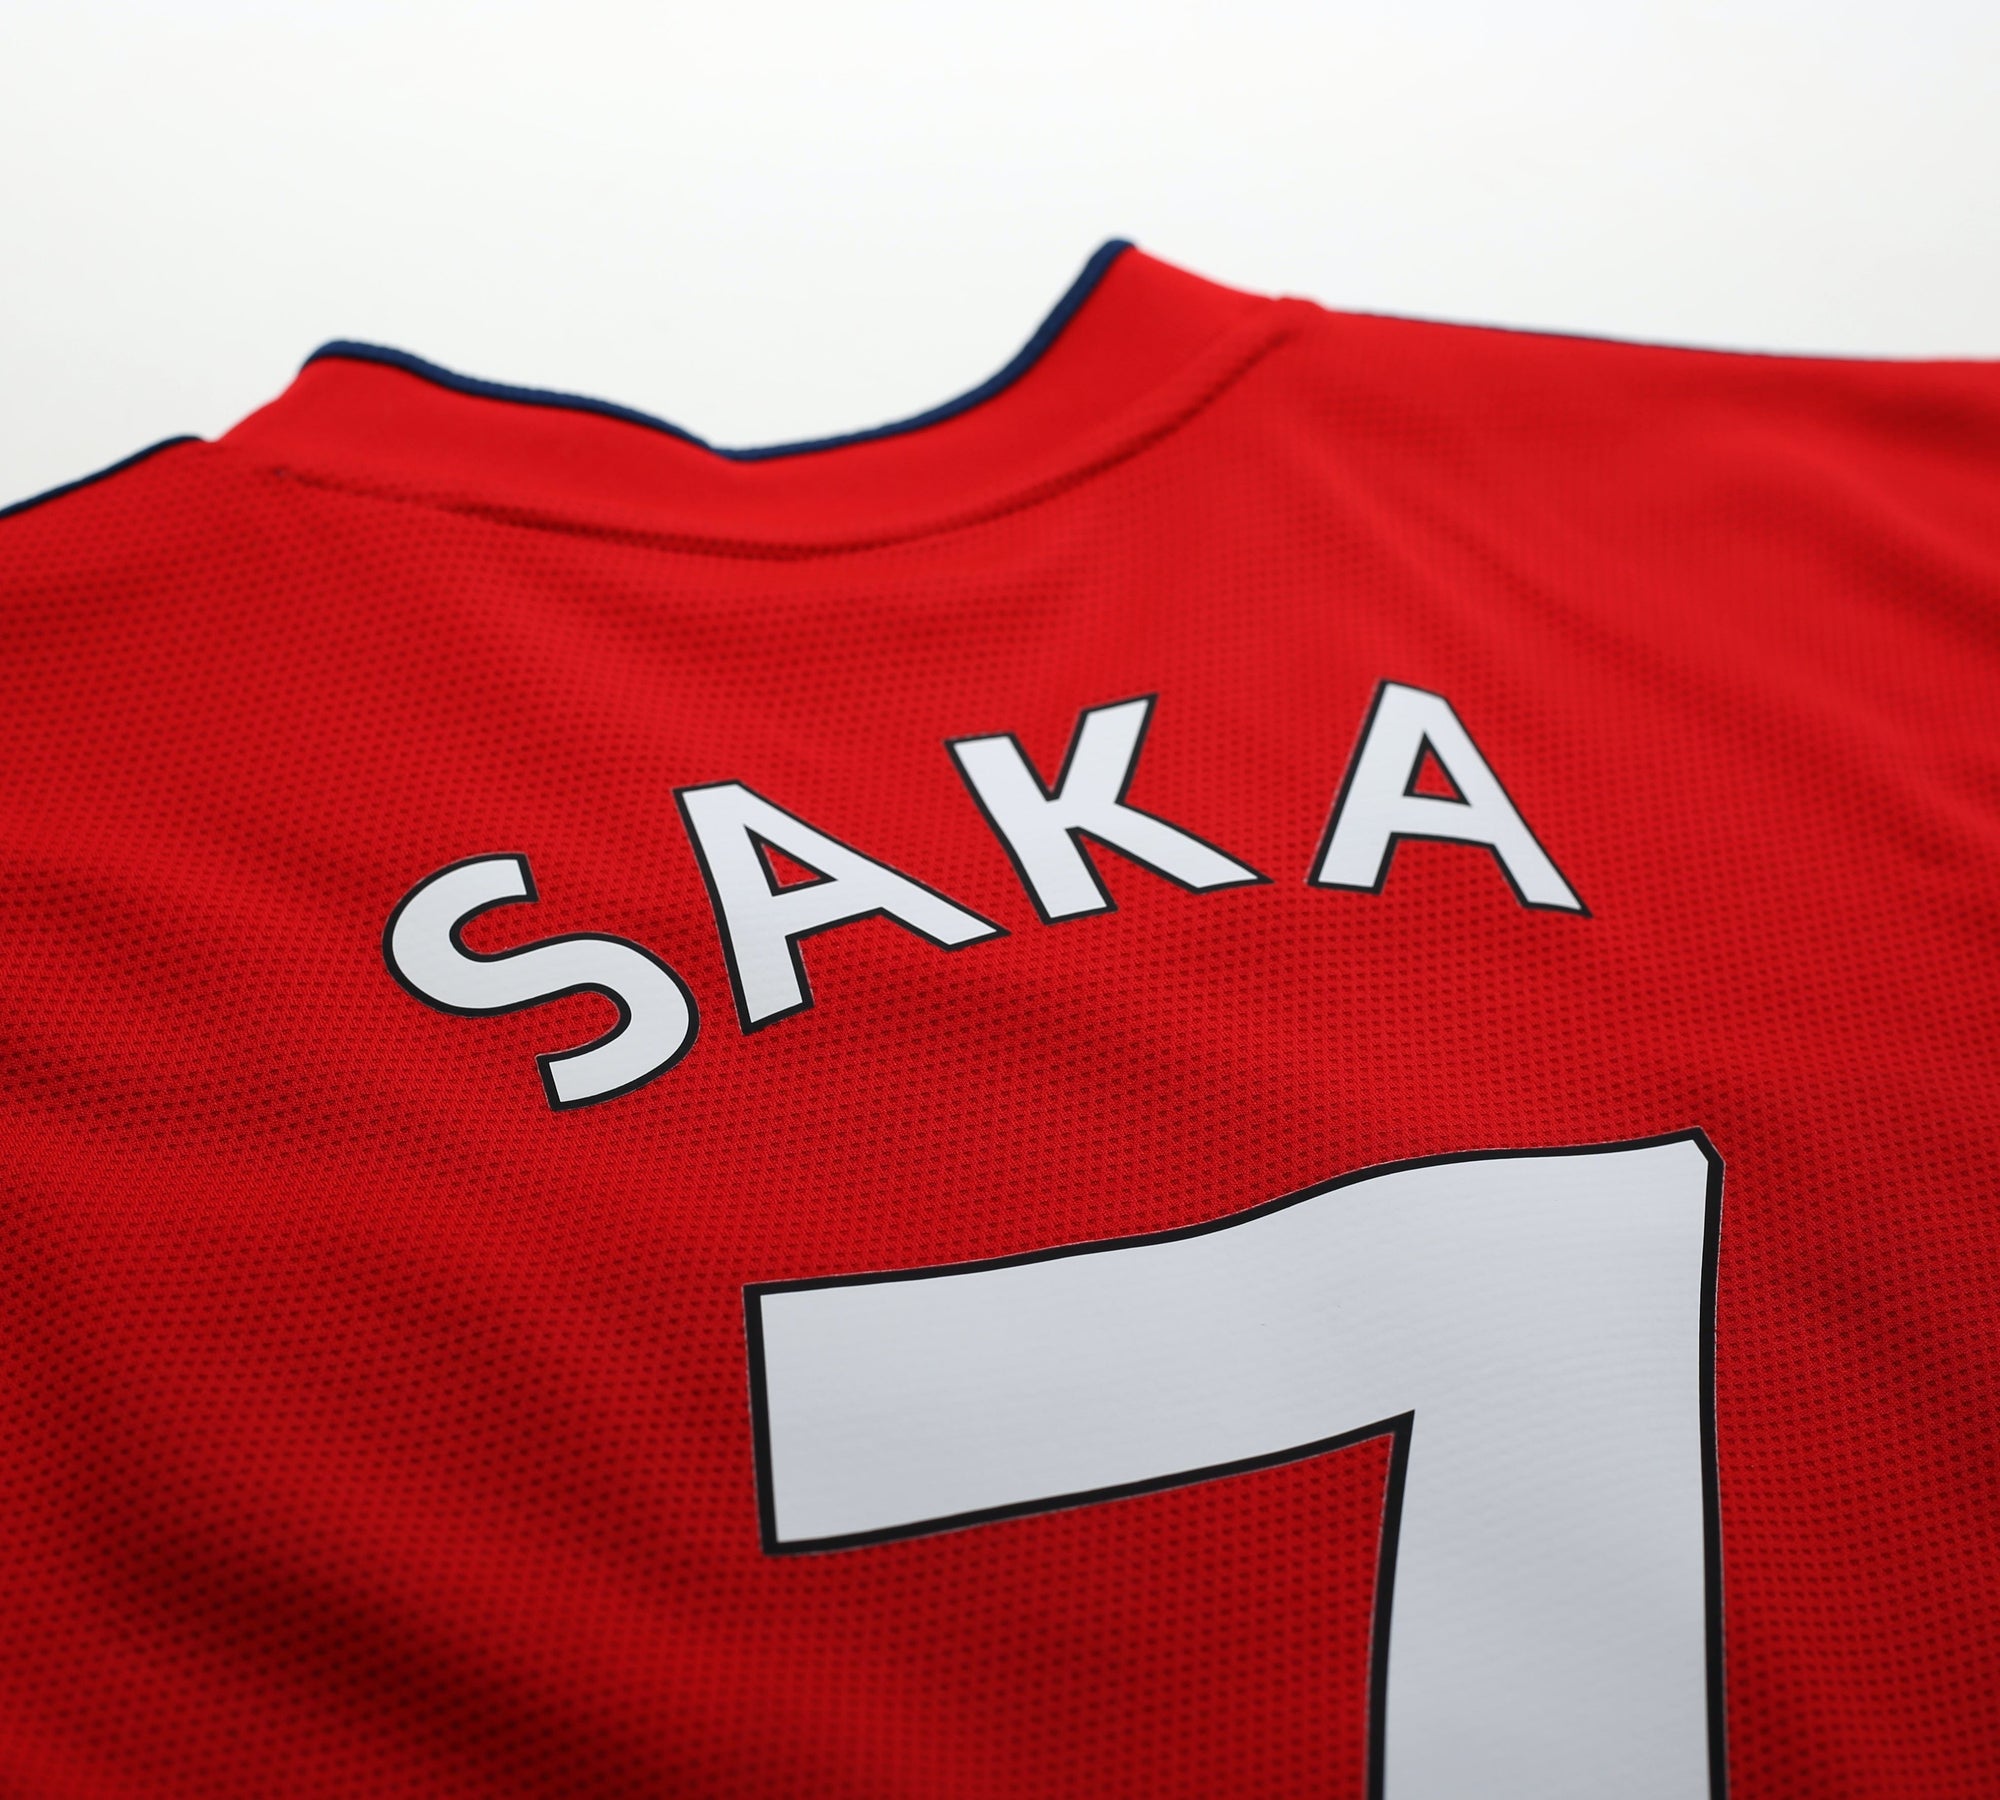 2021/22 SAKA #7 Arsenal Adidas Home Football Shirt (L)